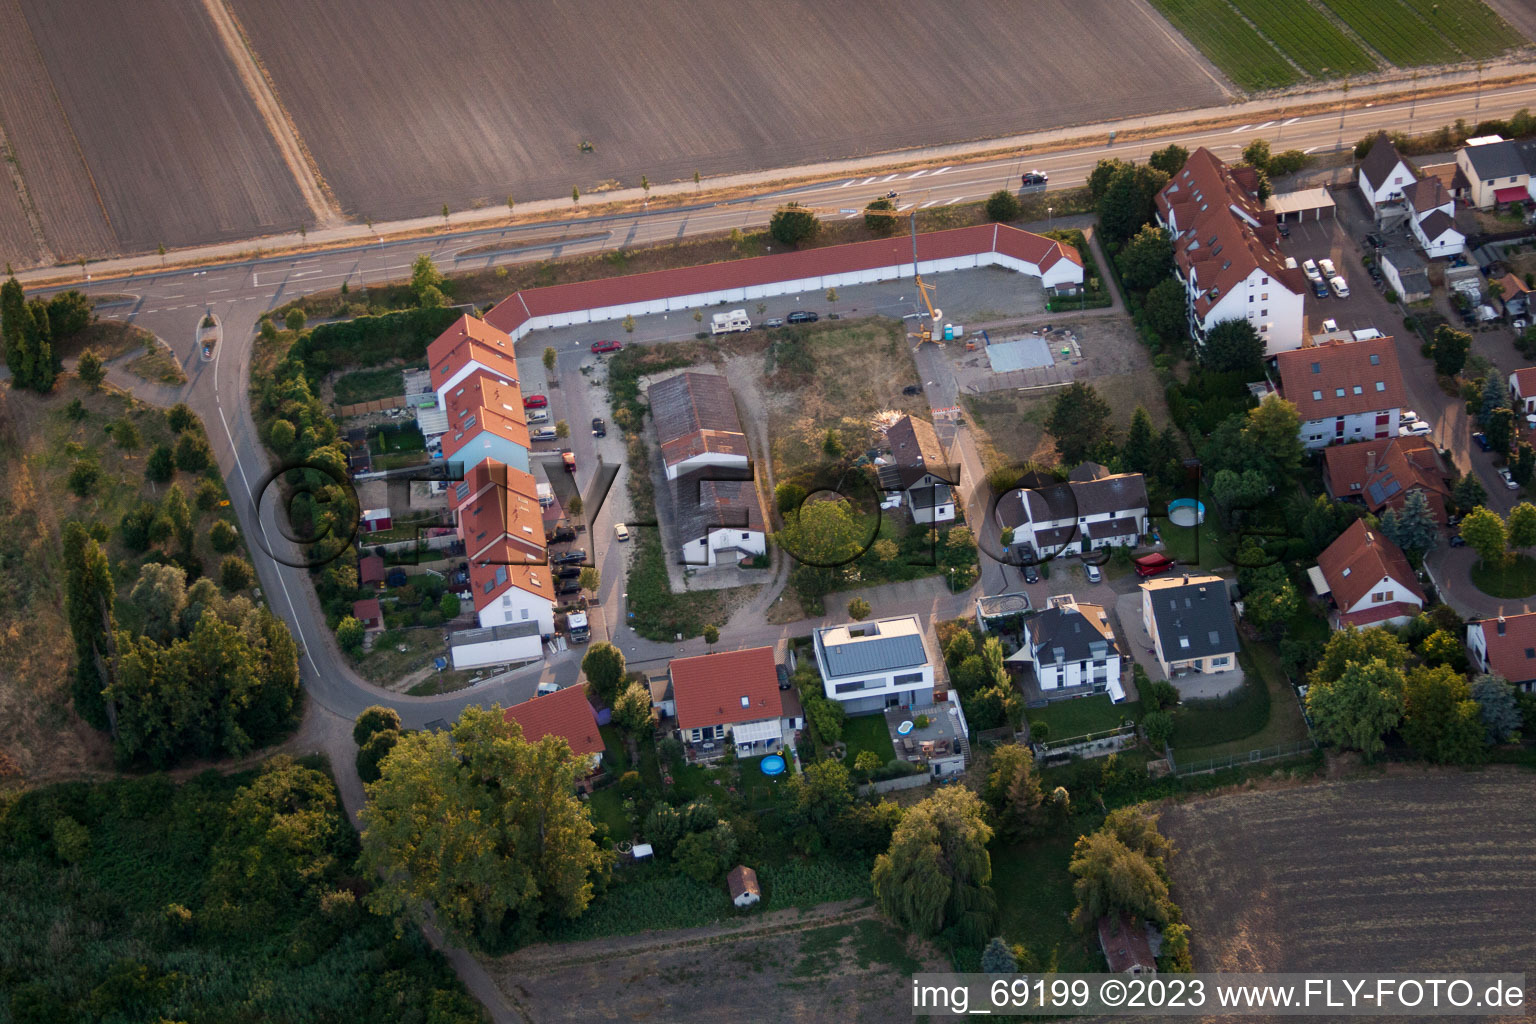 District Roxheim in Bobenheim-Roxheim in the state Rhineland-Palatinate, Germany from a drone